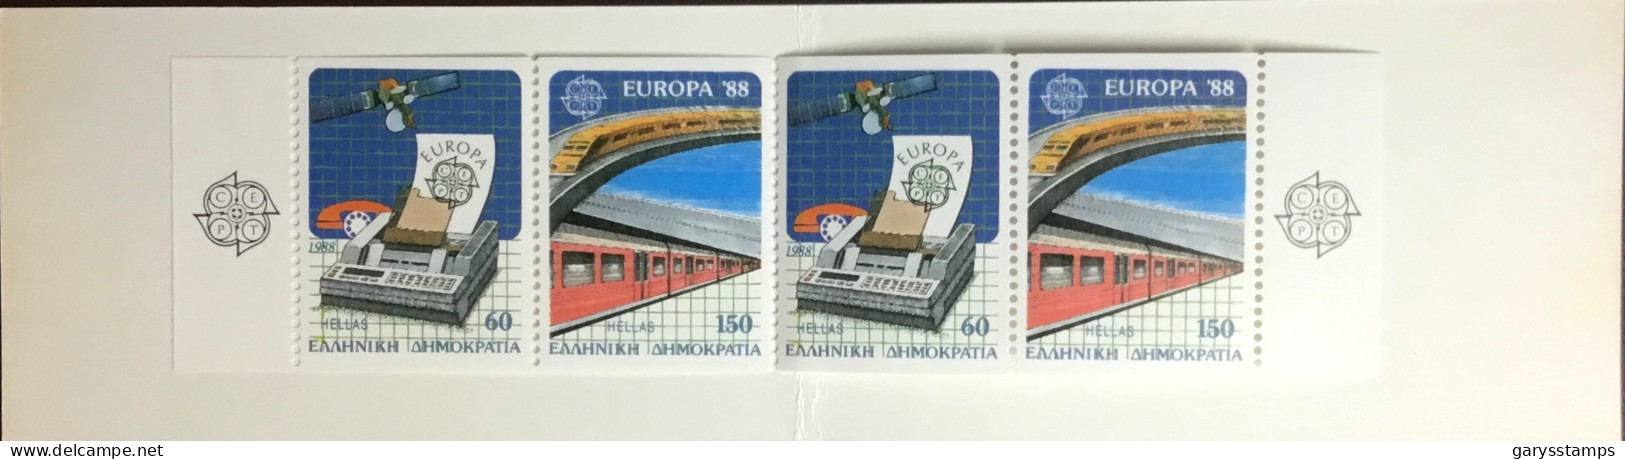 Greece 1988 Europa Booklet Unused - Carnets